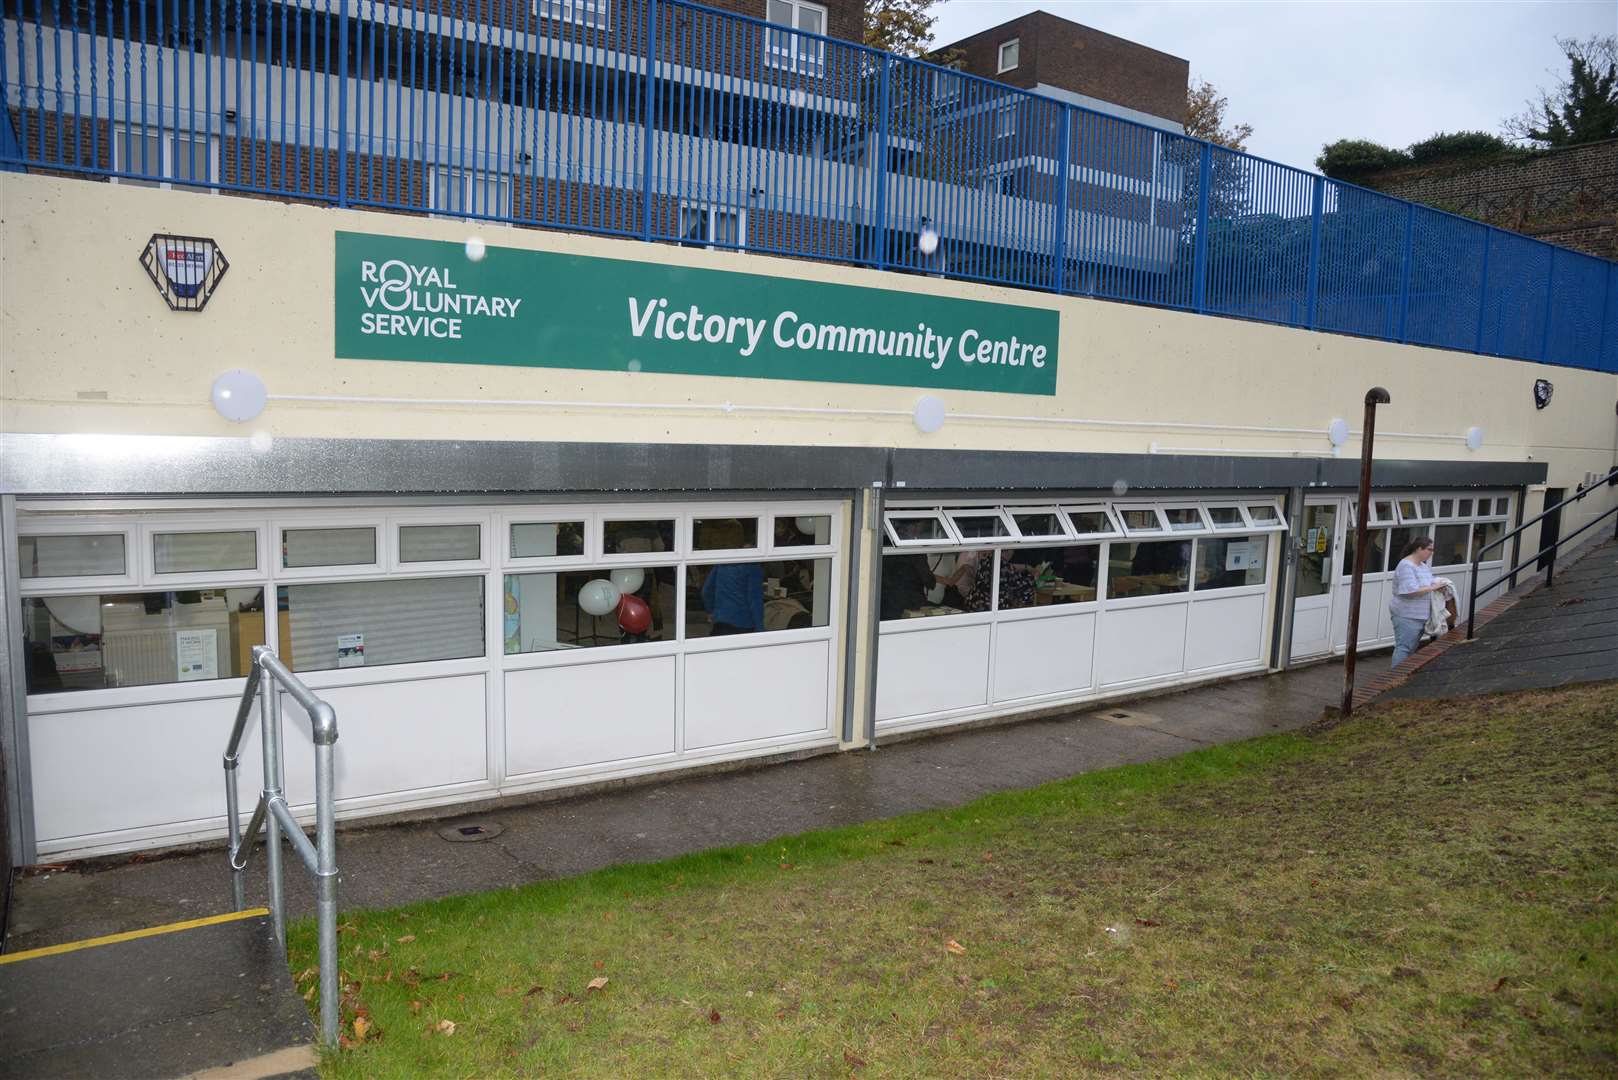 The RVS Victory Community Centre